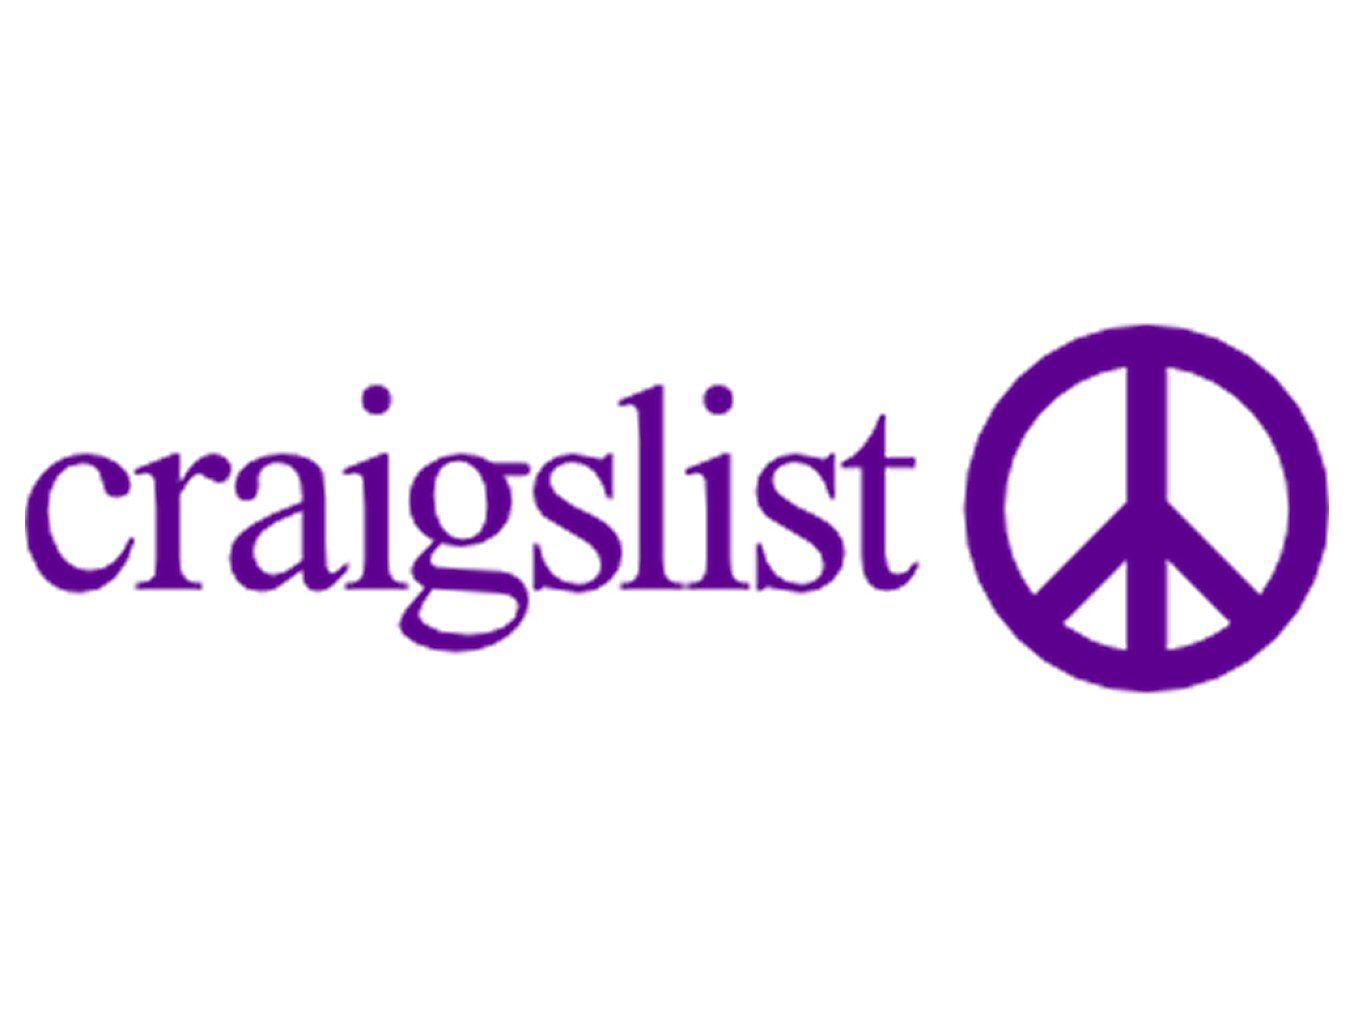 Craigslist App Logo - Best Craigslist Apps - AptGadget.com